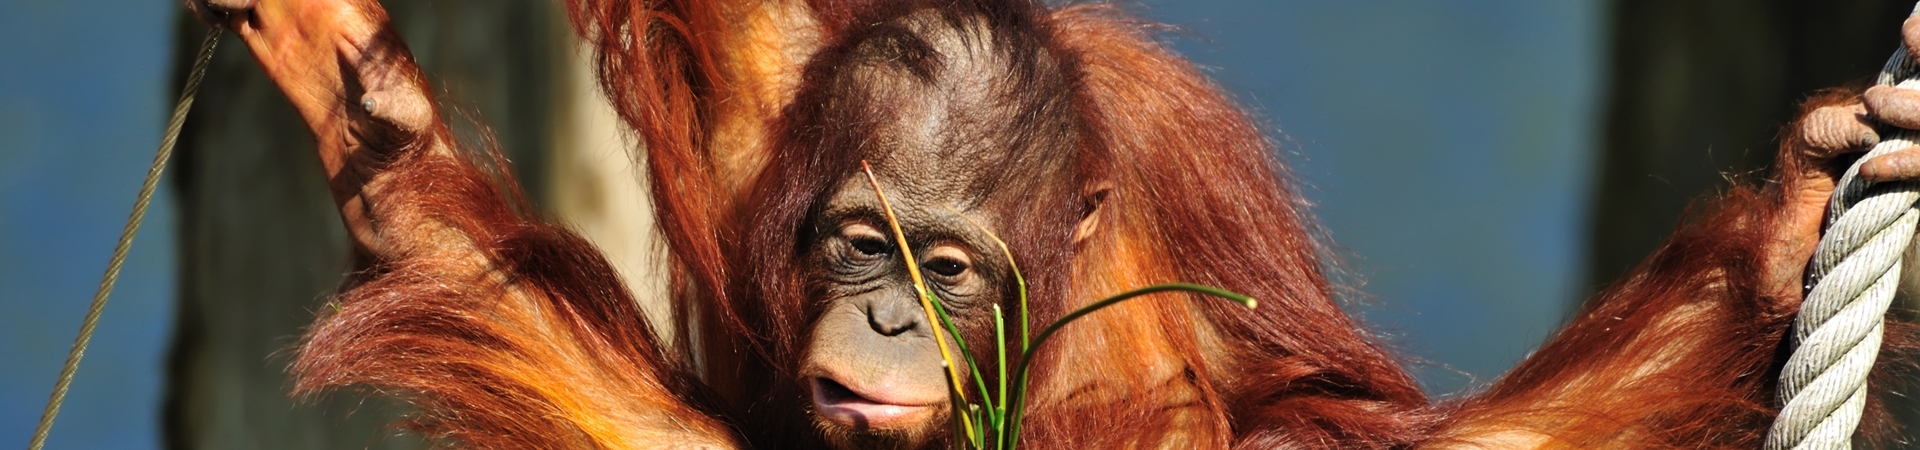 Trekking - Trailing the Sumatran Orangutan